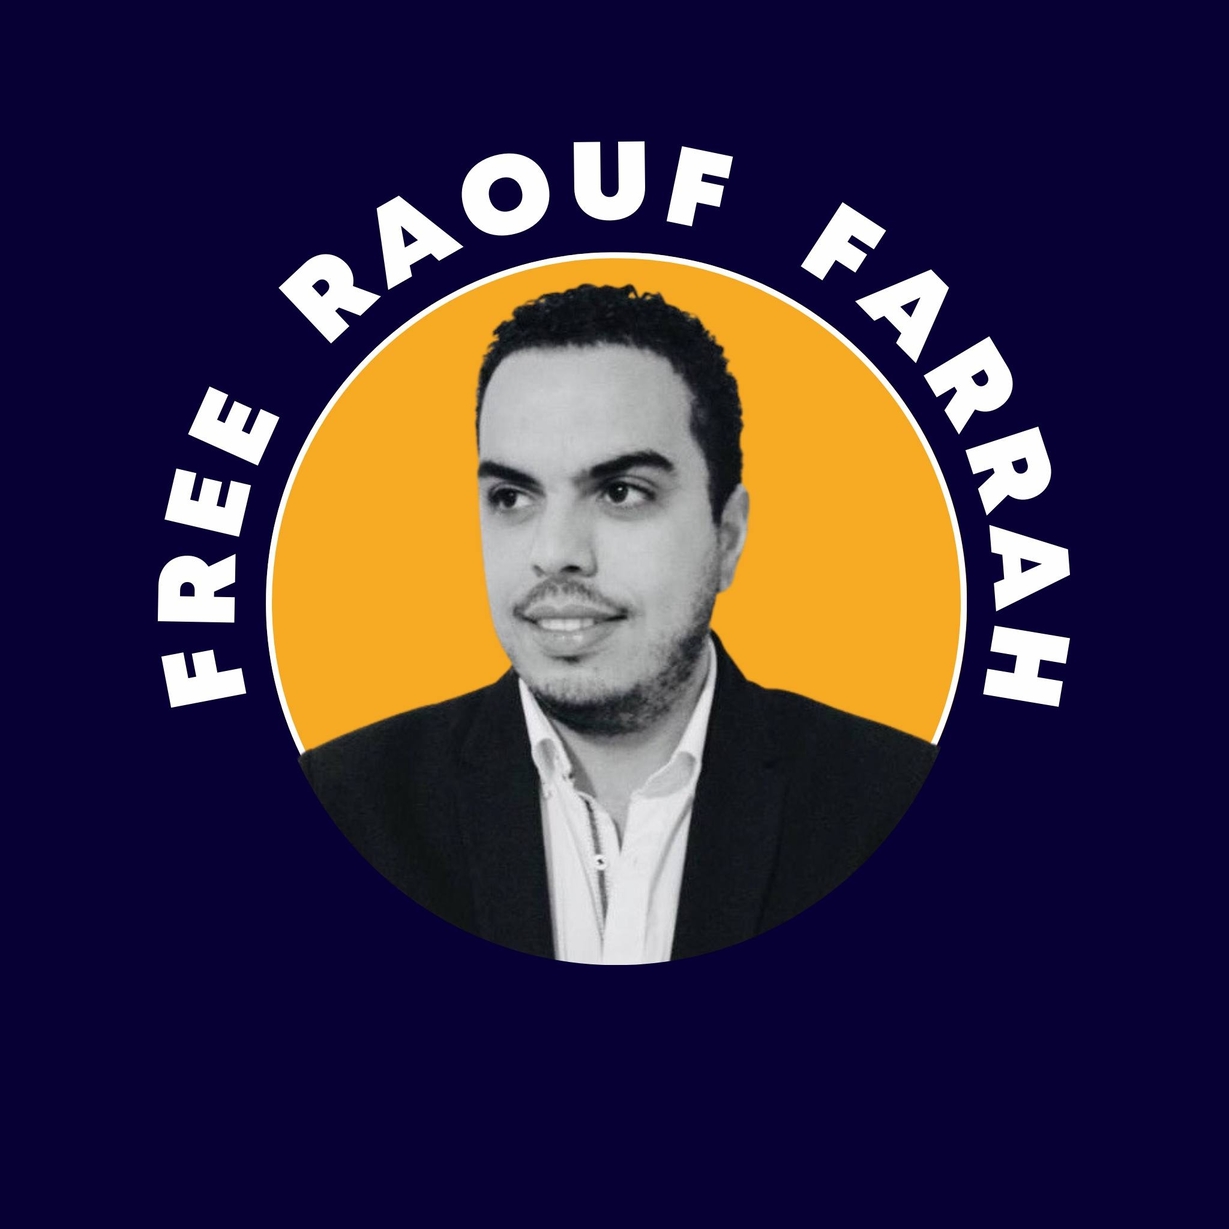 Free Raouf Farrah